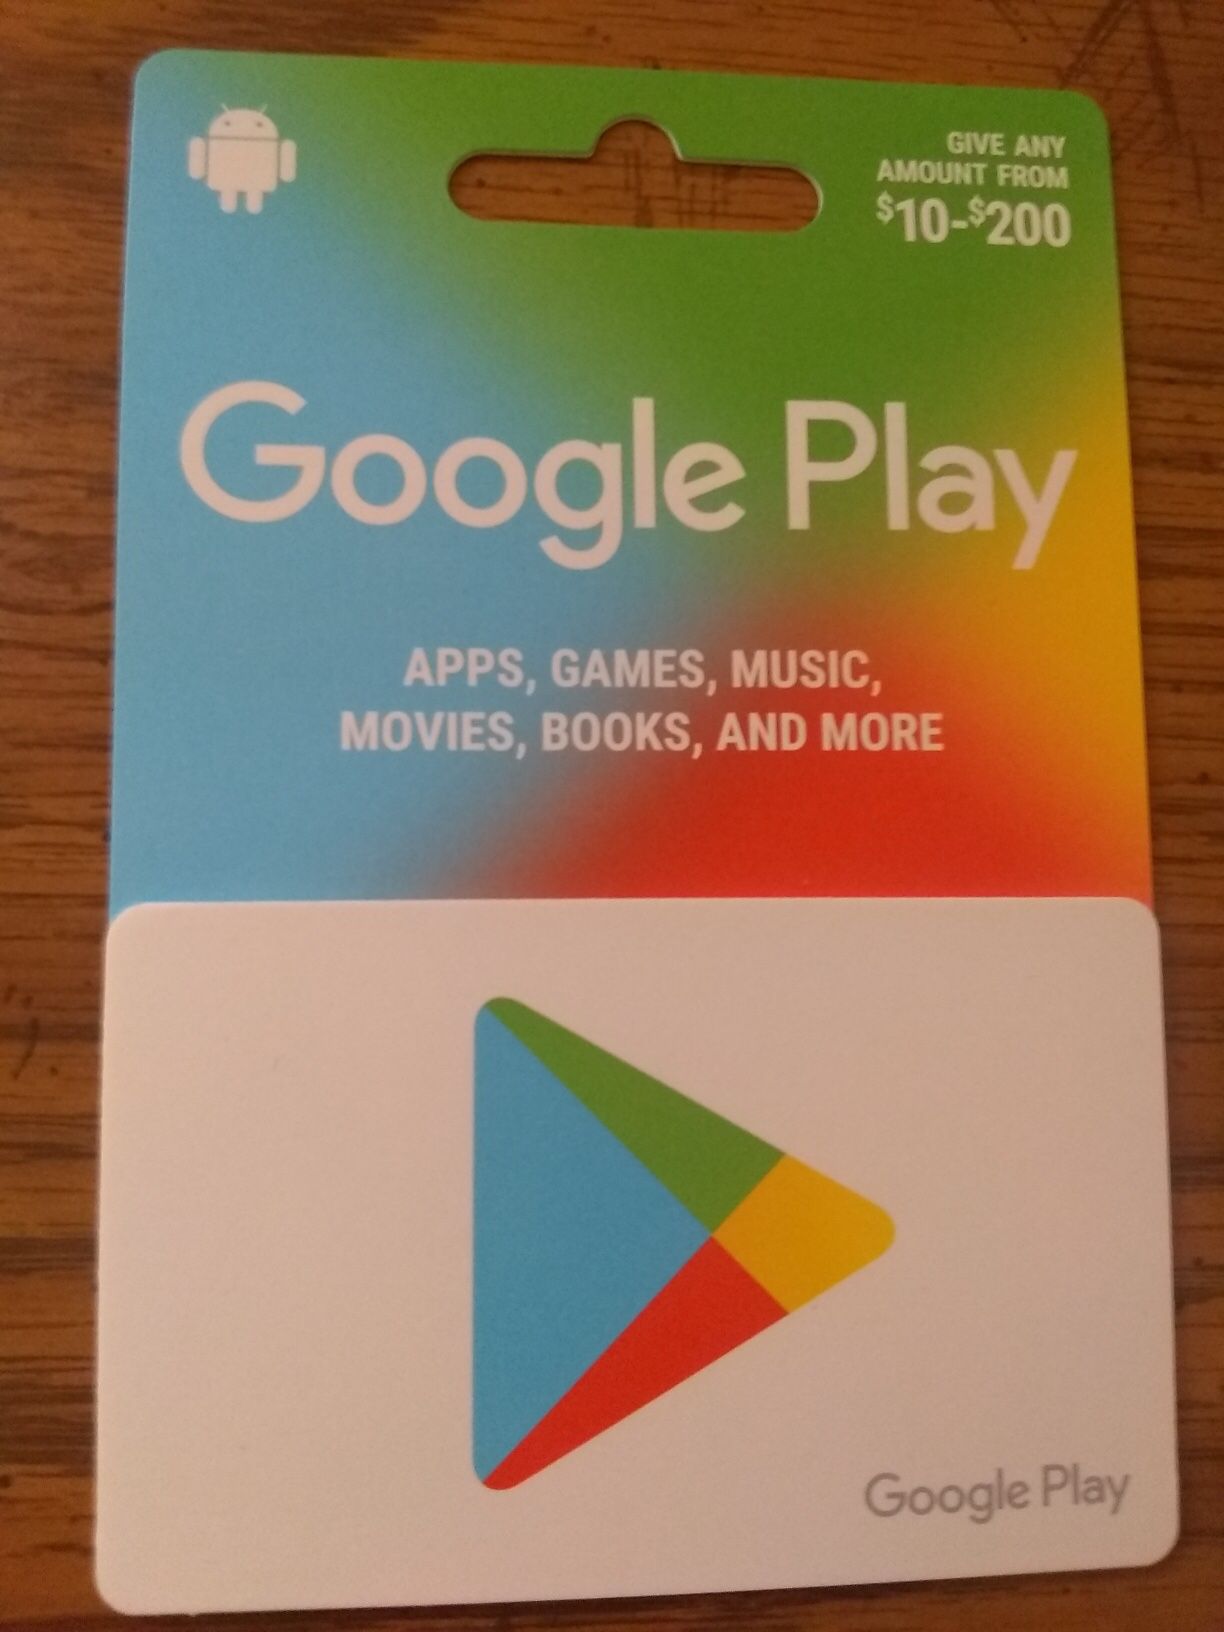 $200 value google play card